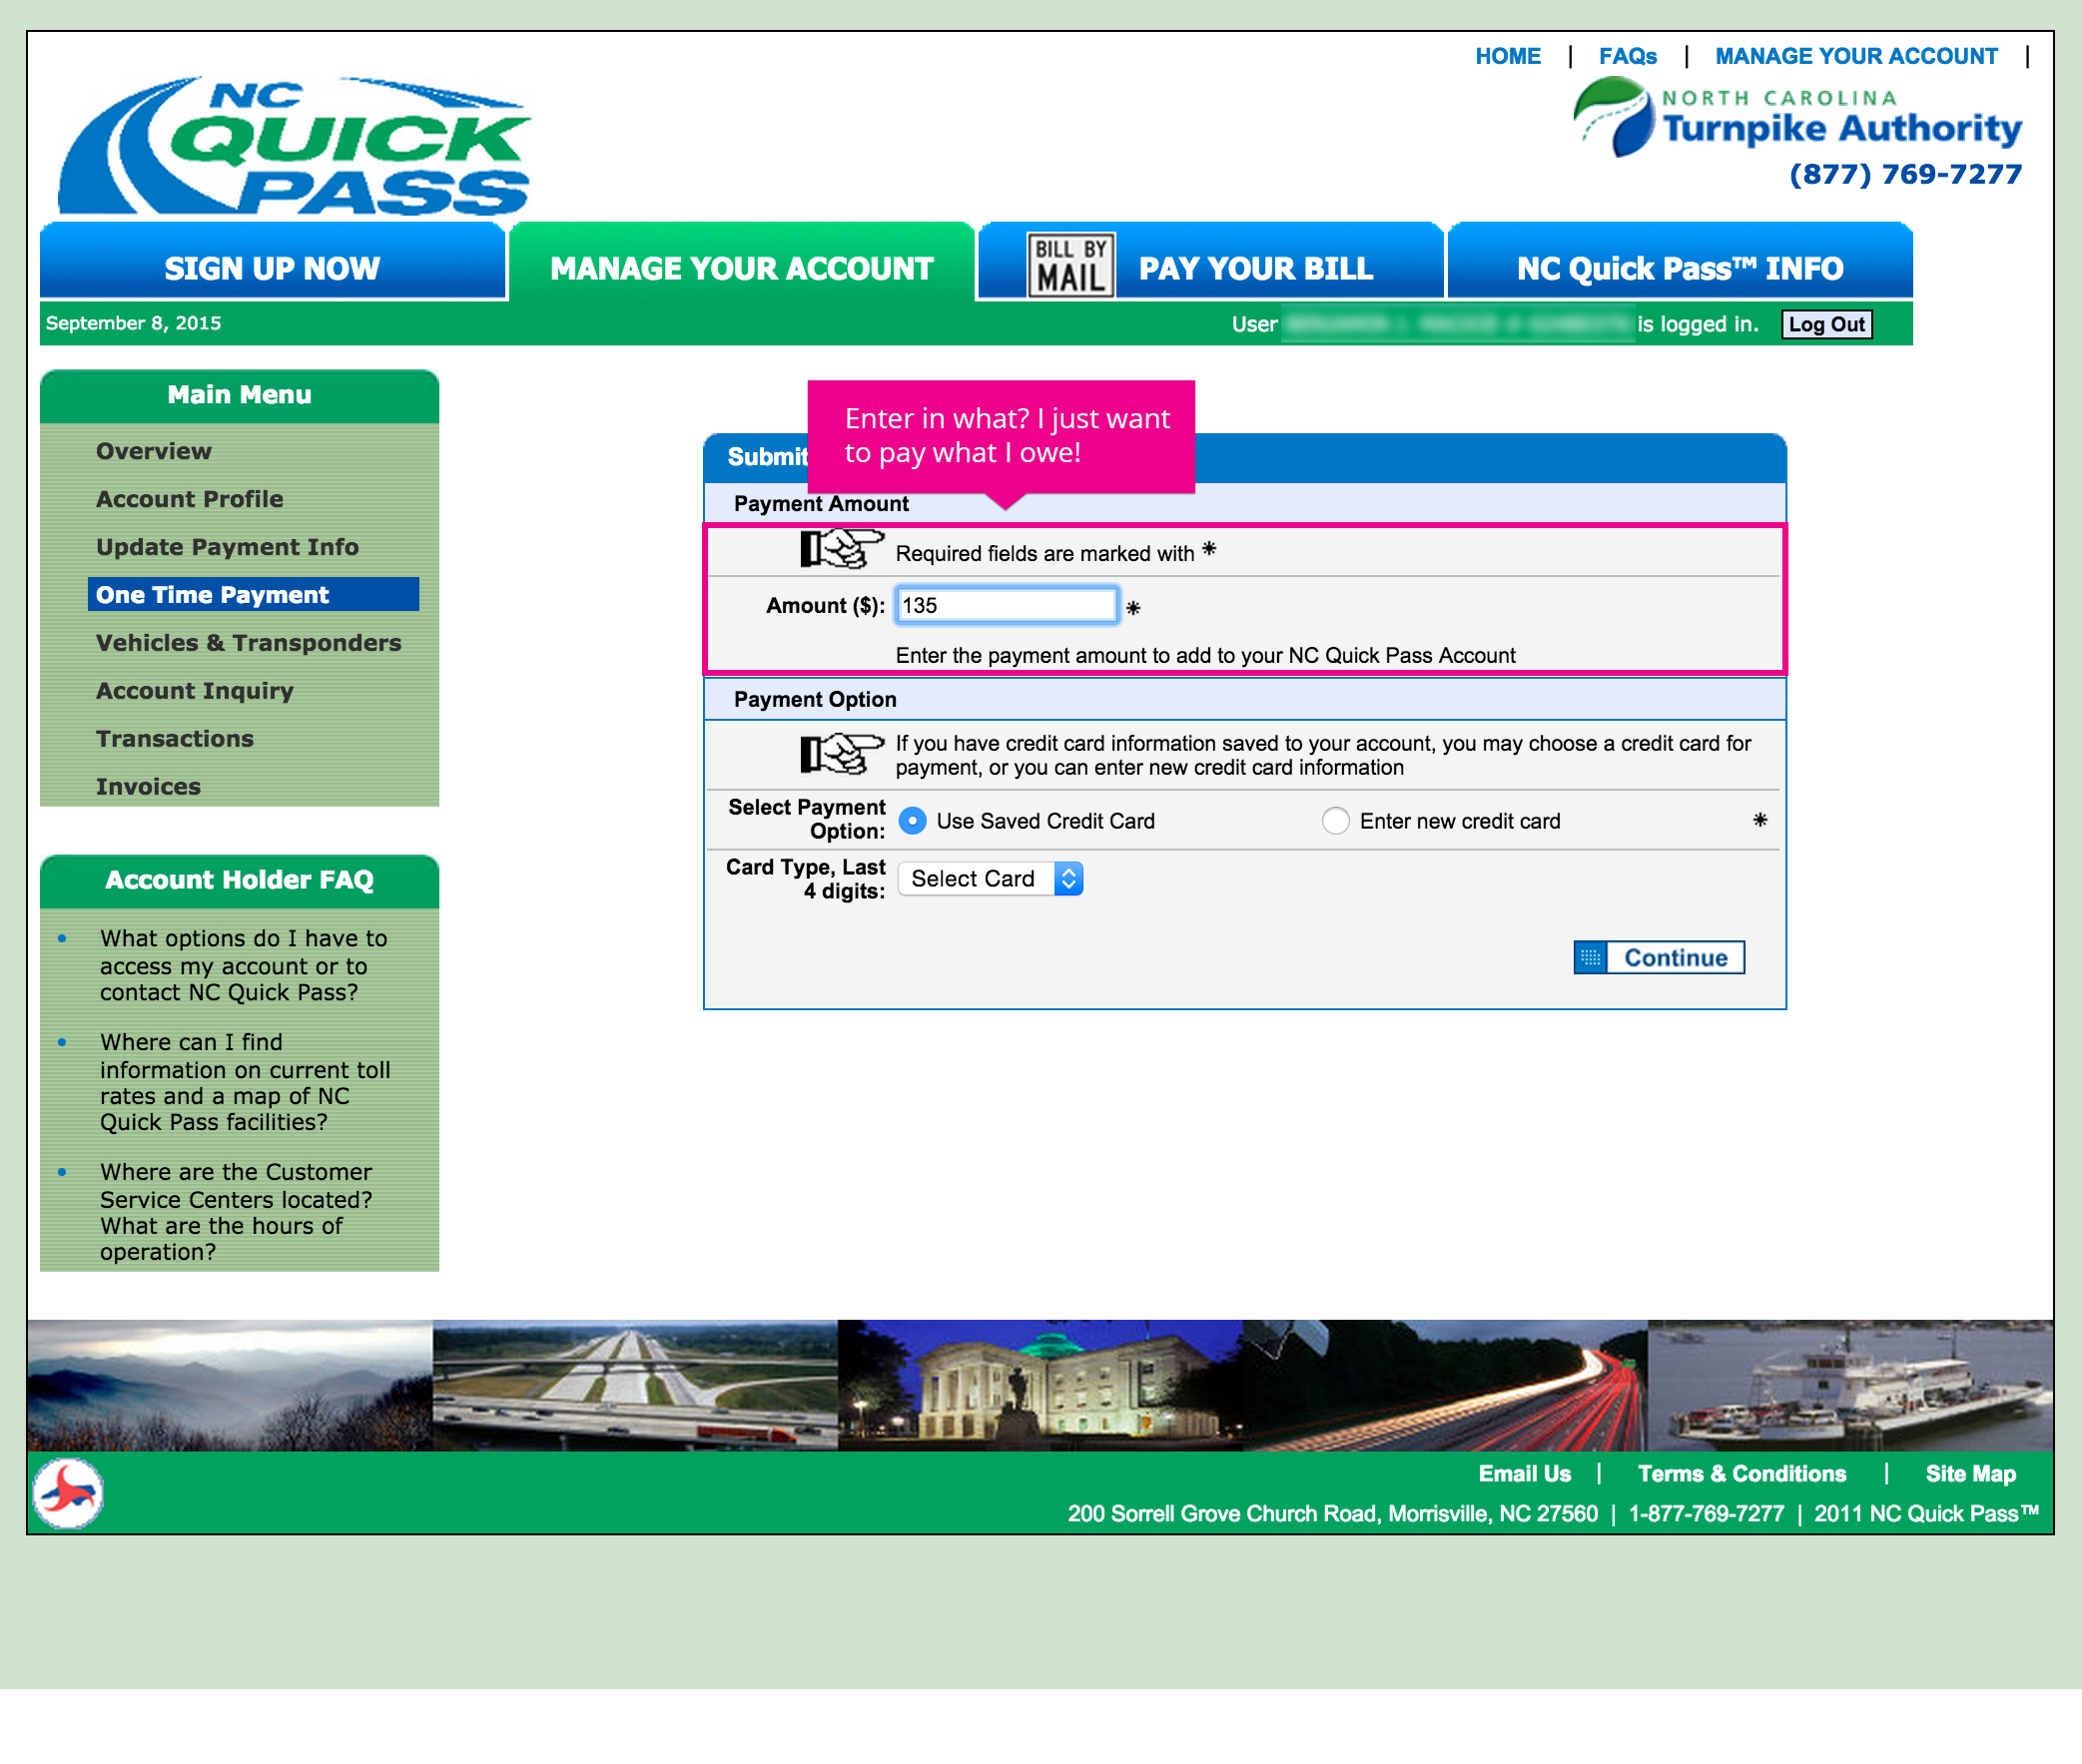 North Carolina Quick Pass website screengrab